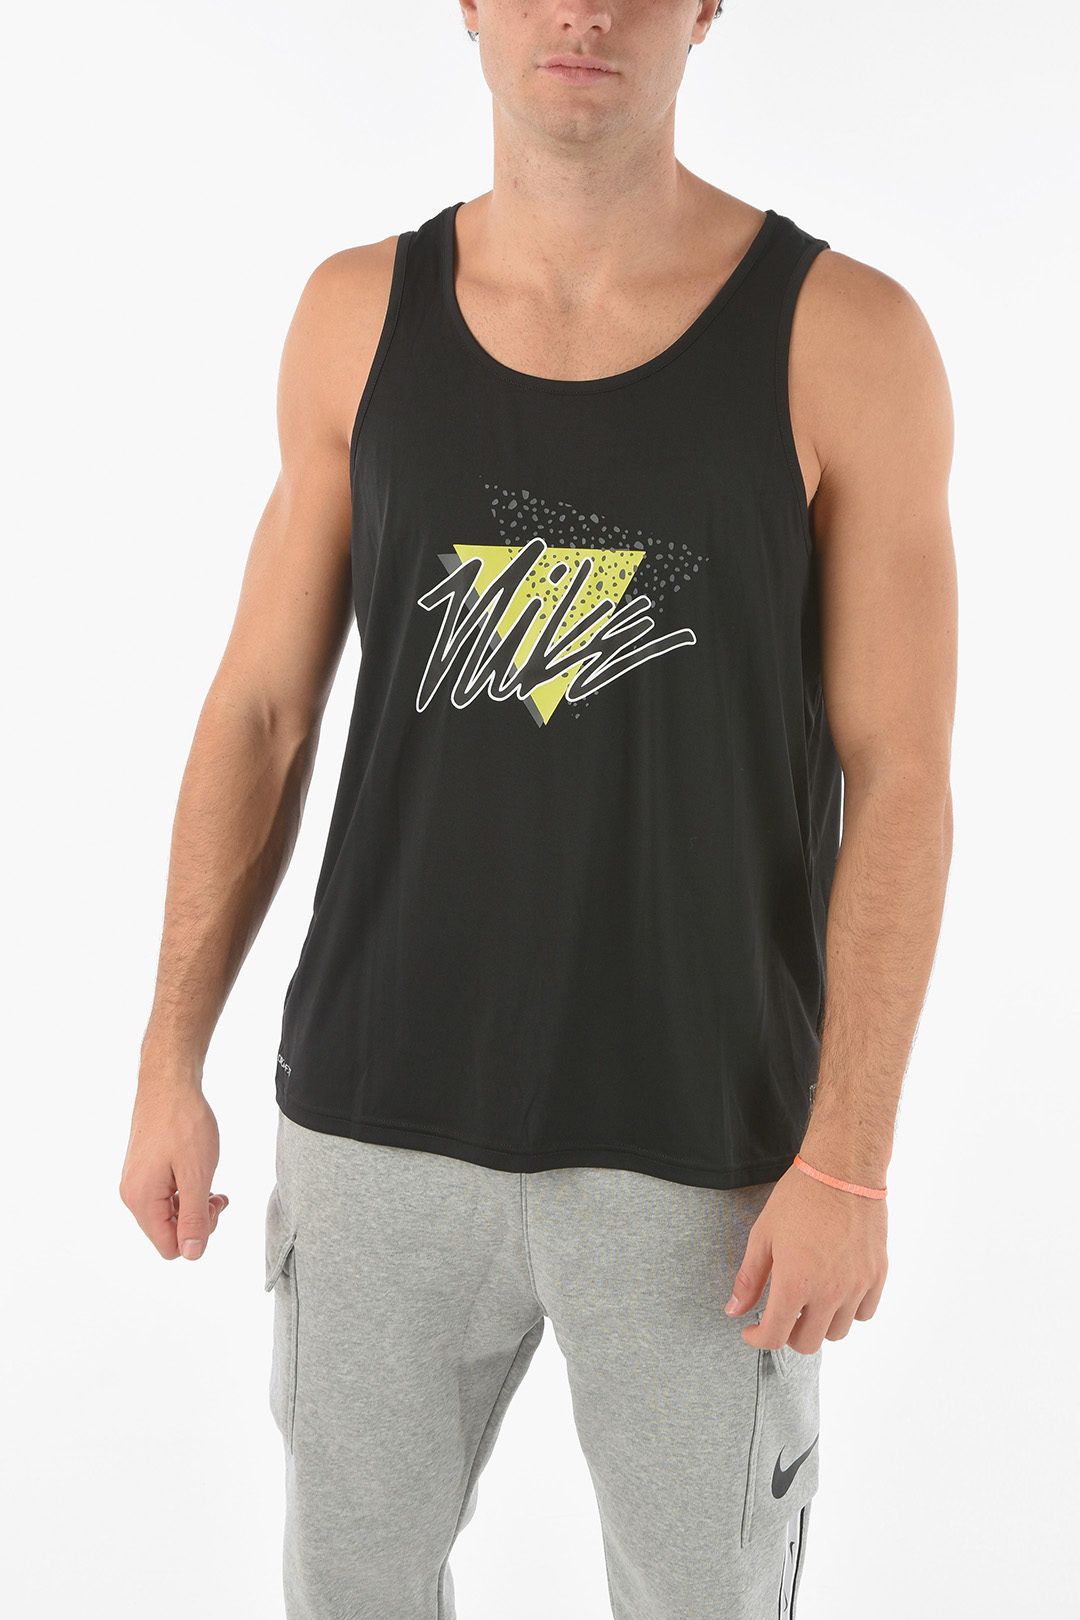 Nike SWIM Logo Printed Dri- Fit Tank top men - Glamood Outlet